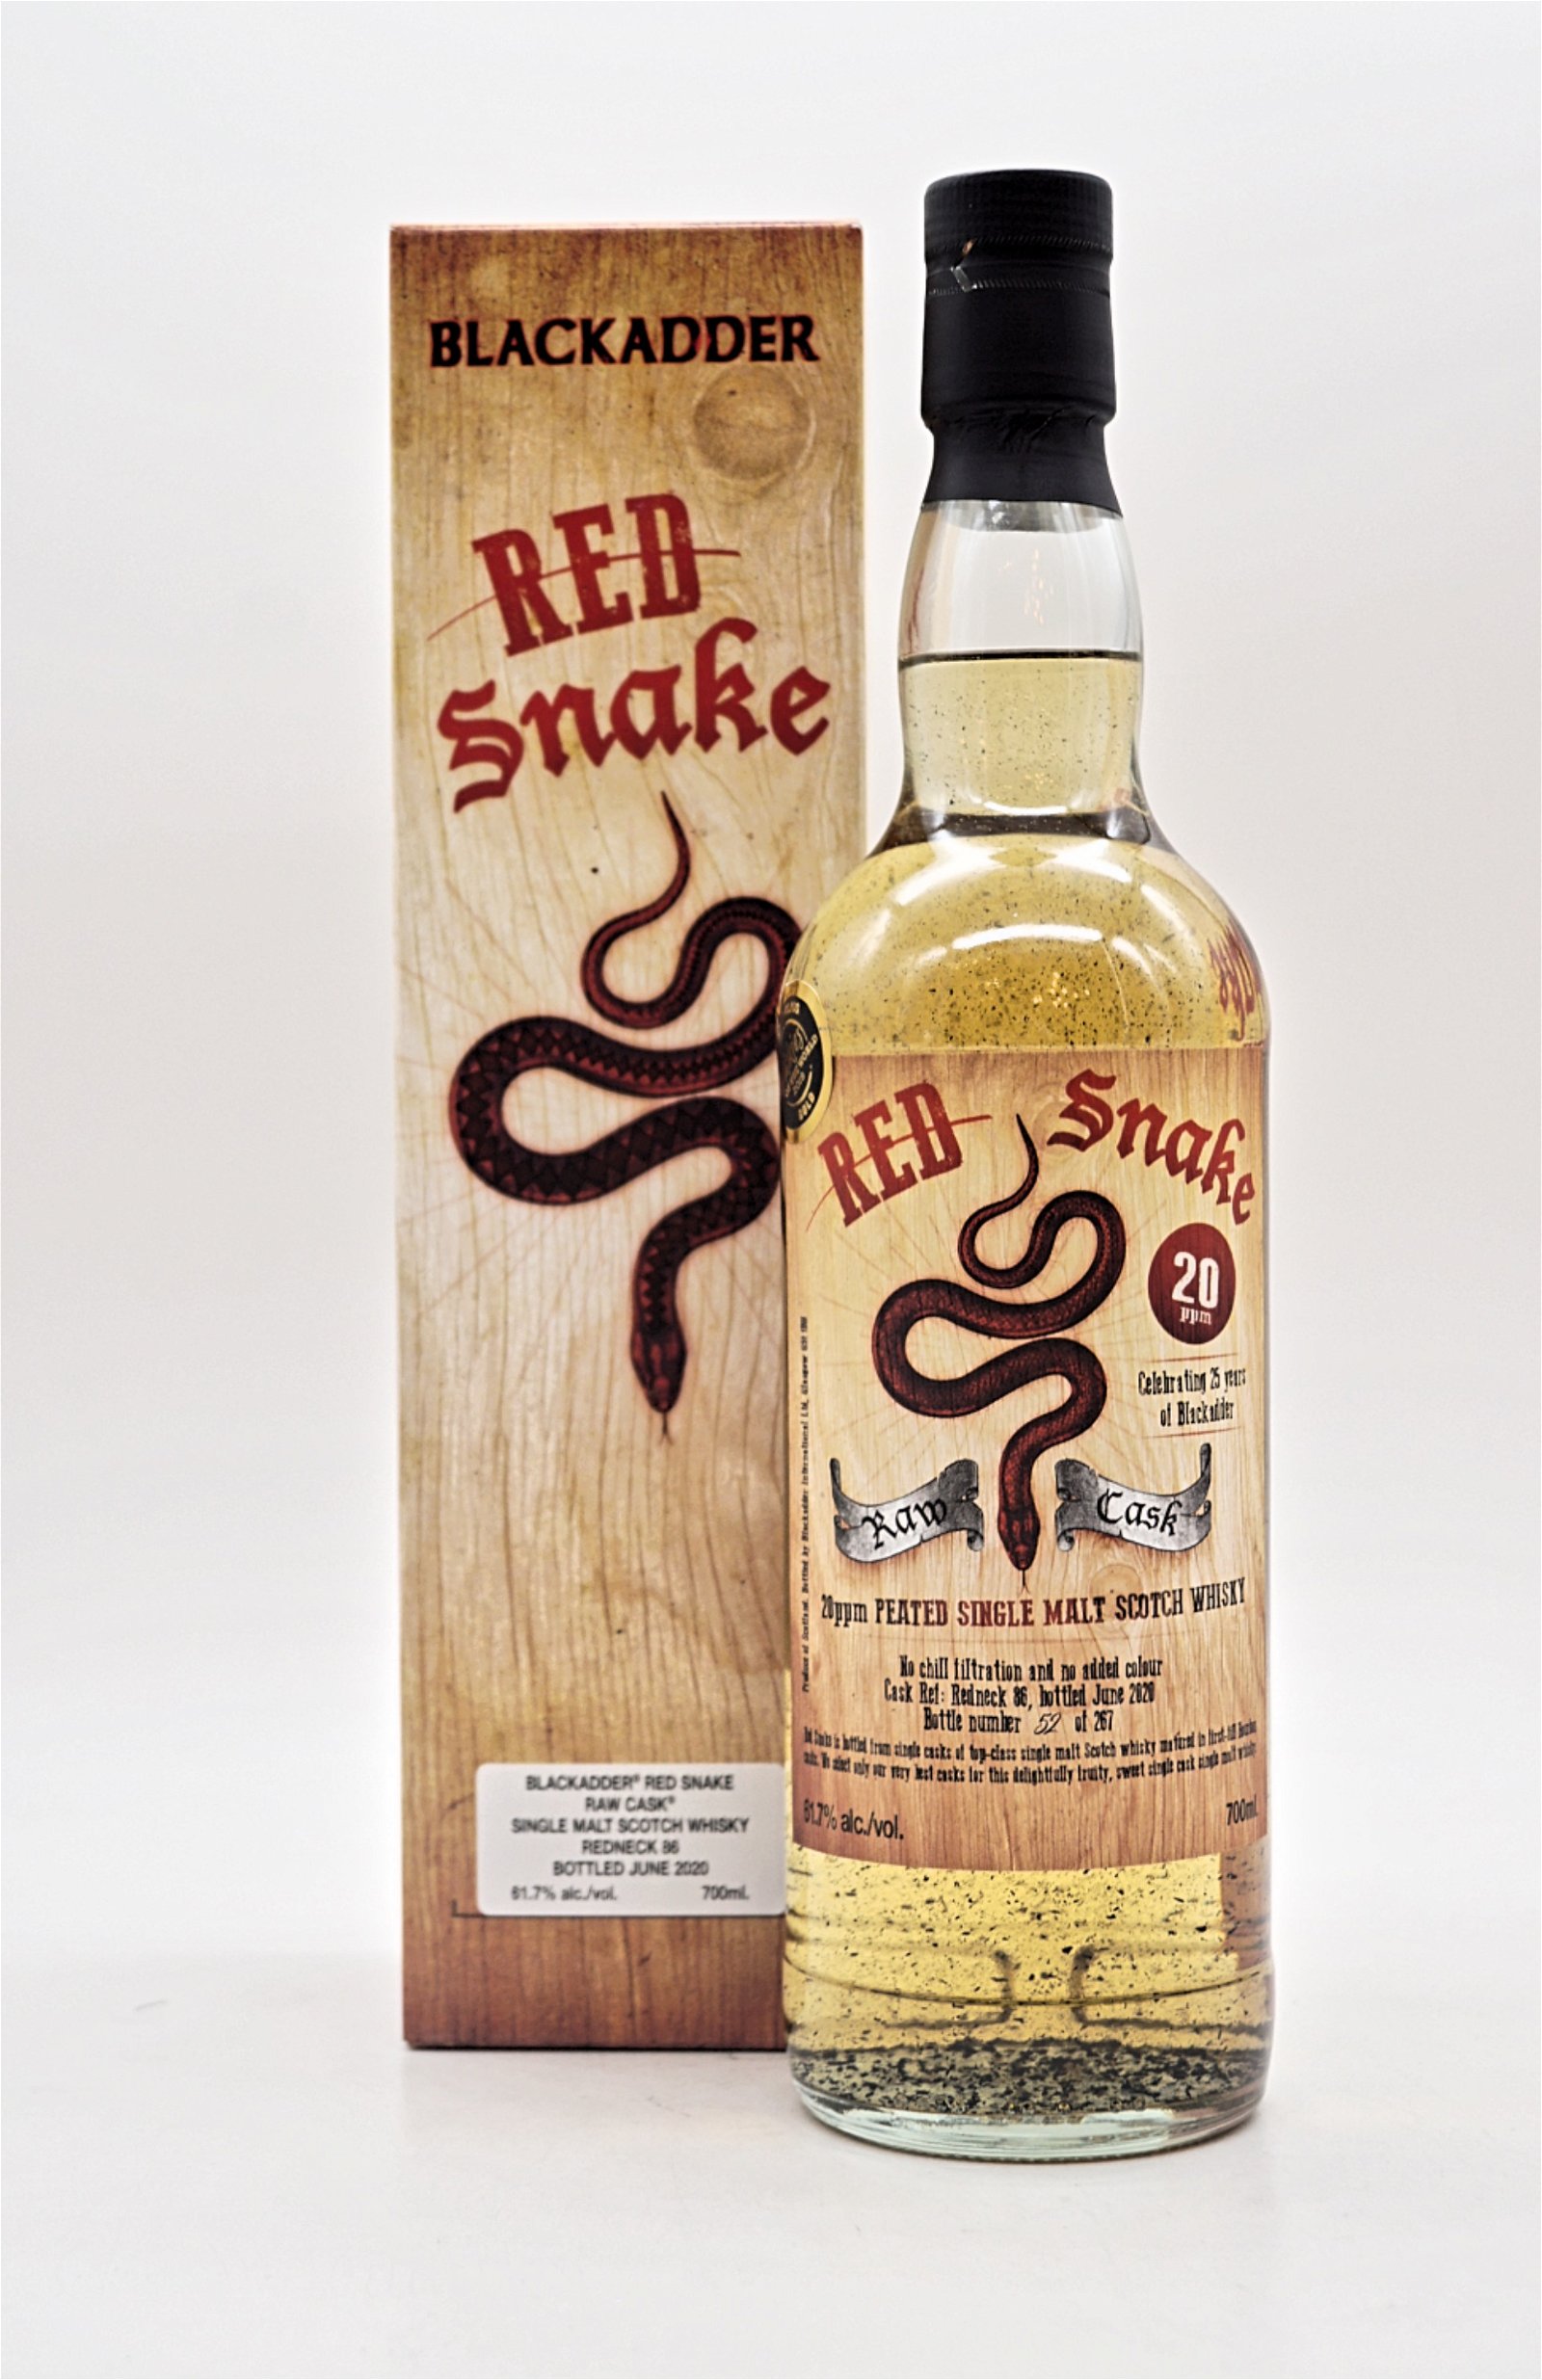 Blackadder Red Snake Raw Cask Redneck 86 Peated Single Malt Scotch Whisky